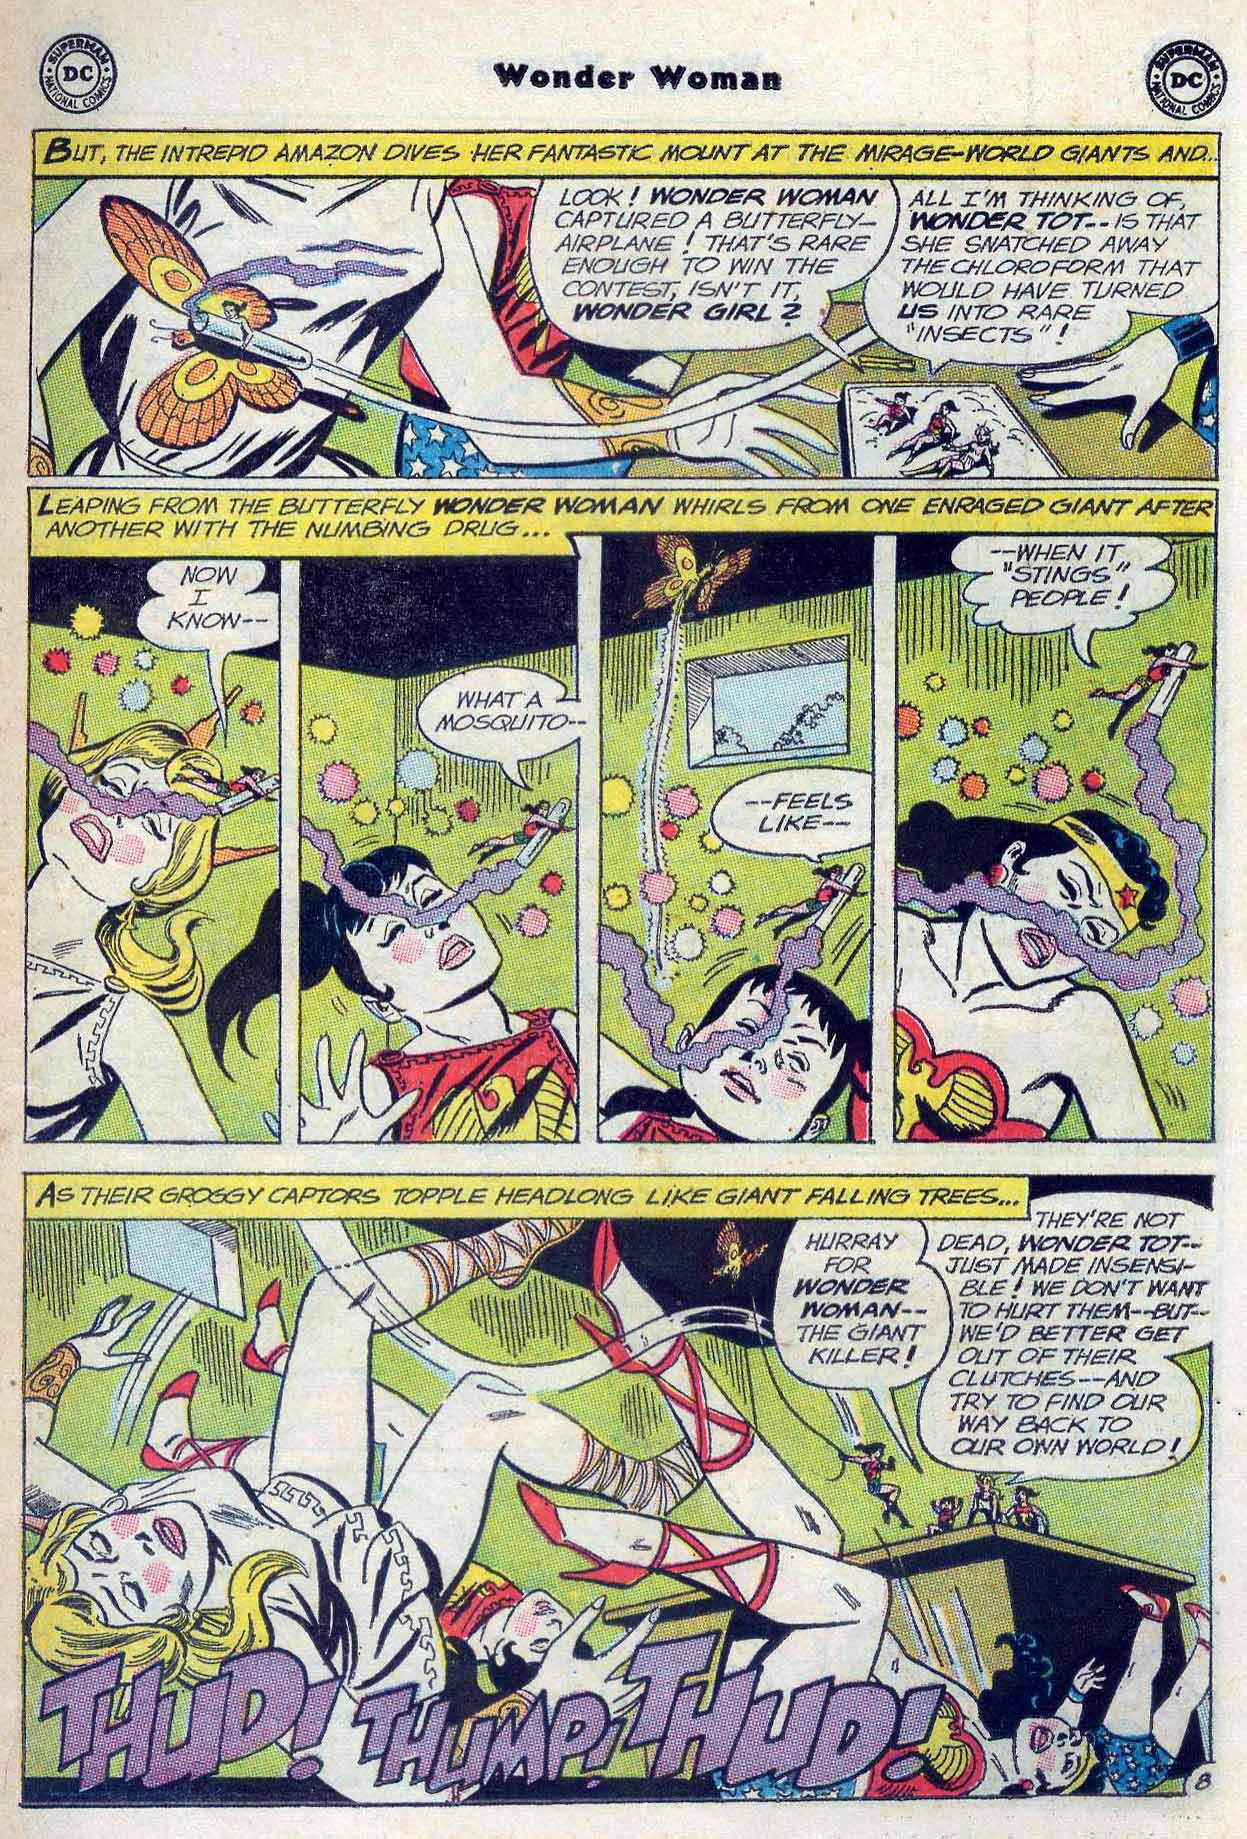 Sleepy Comics on X: Wonder Woman #142 sleeping gas #chloroform scene  t.coVelU47AapR  X